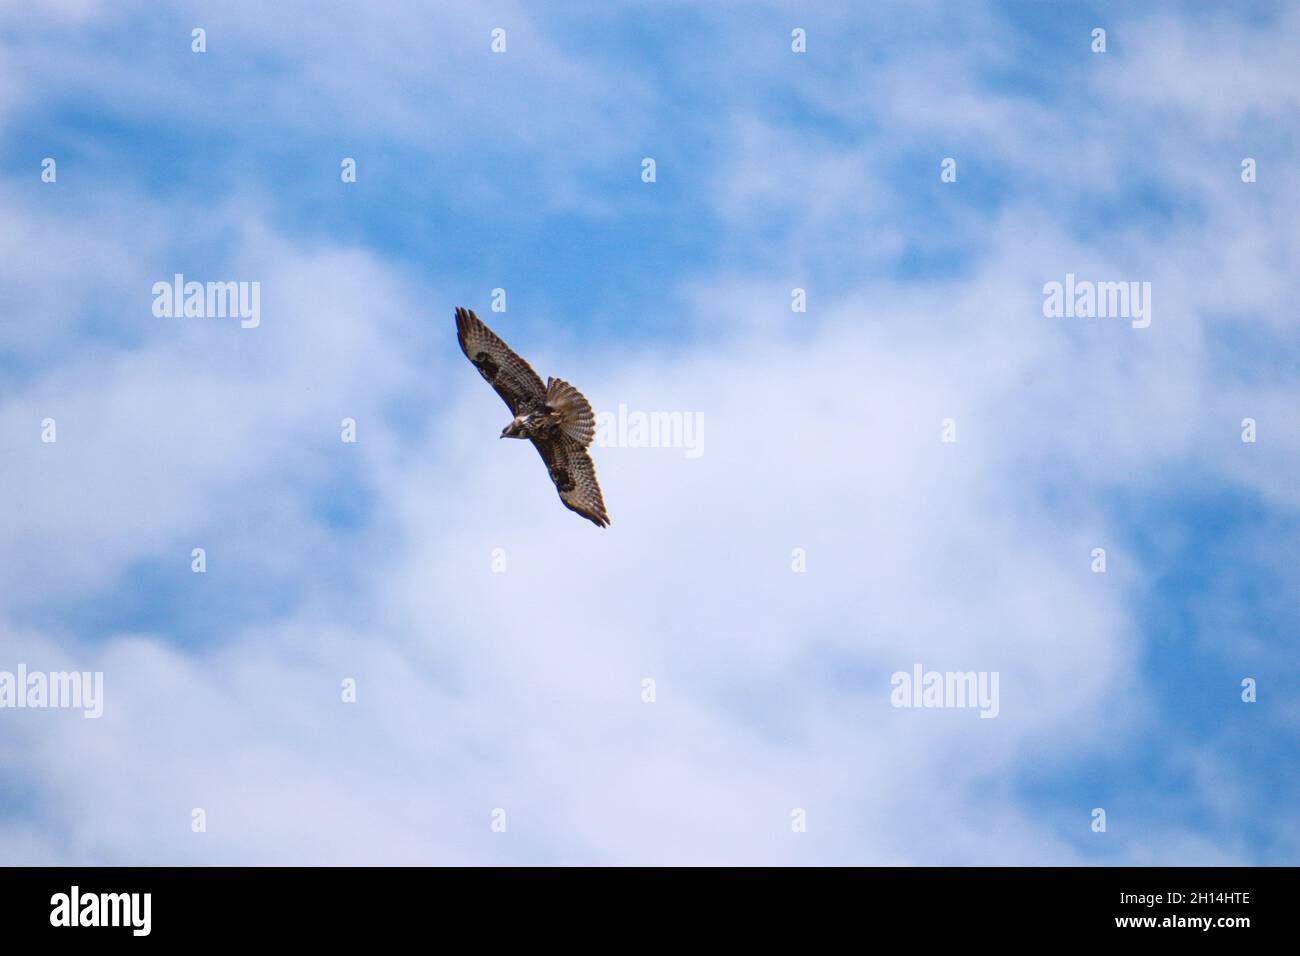 A Common or Eurasian Buzzard (Buteo buteo) in flight against a clear blue sky Stock Photo